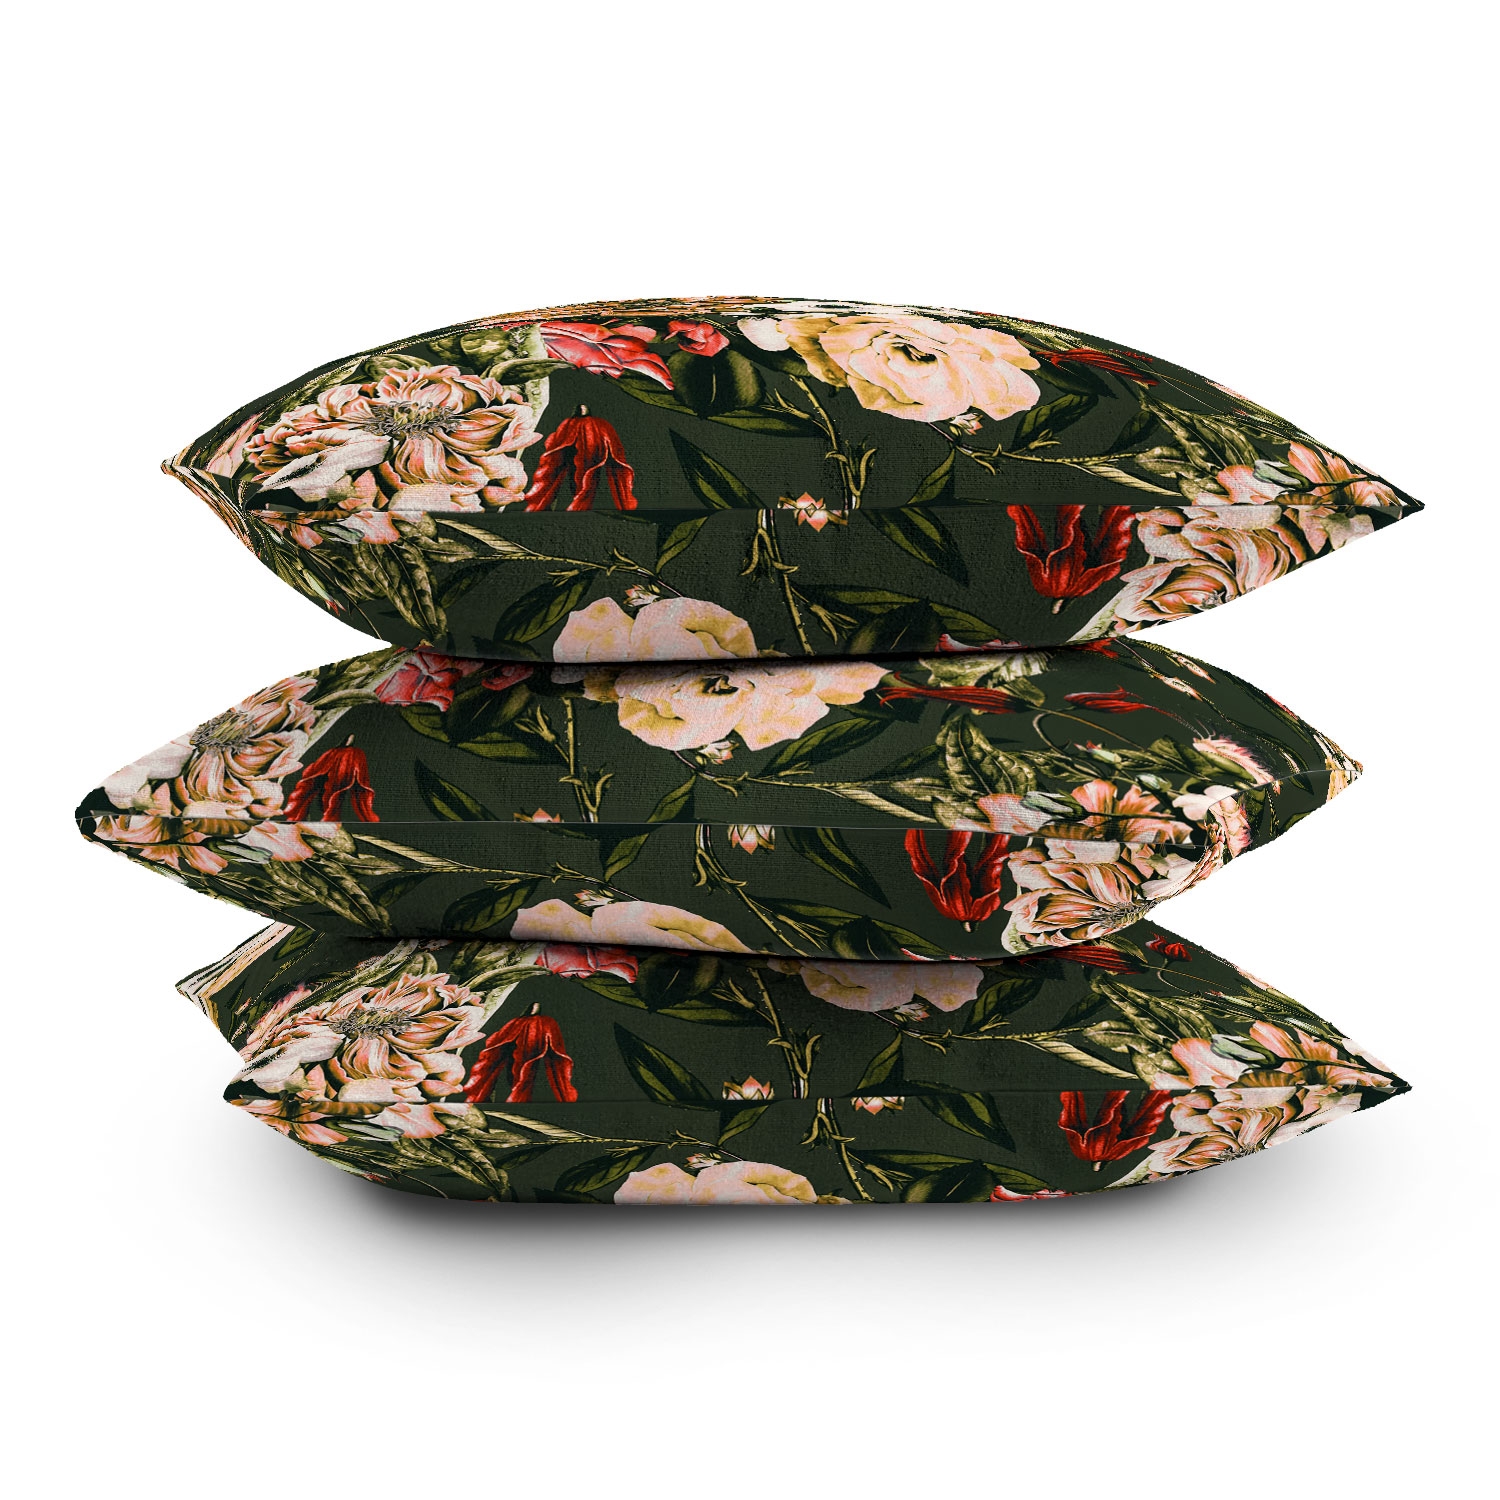 Dark Wild Floral 03 by Marta Barragan Camarasa - Outdoor Throw Pillow 18" x 18" - Image 2